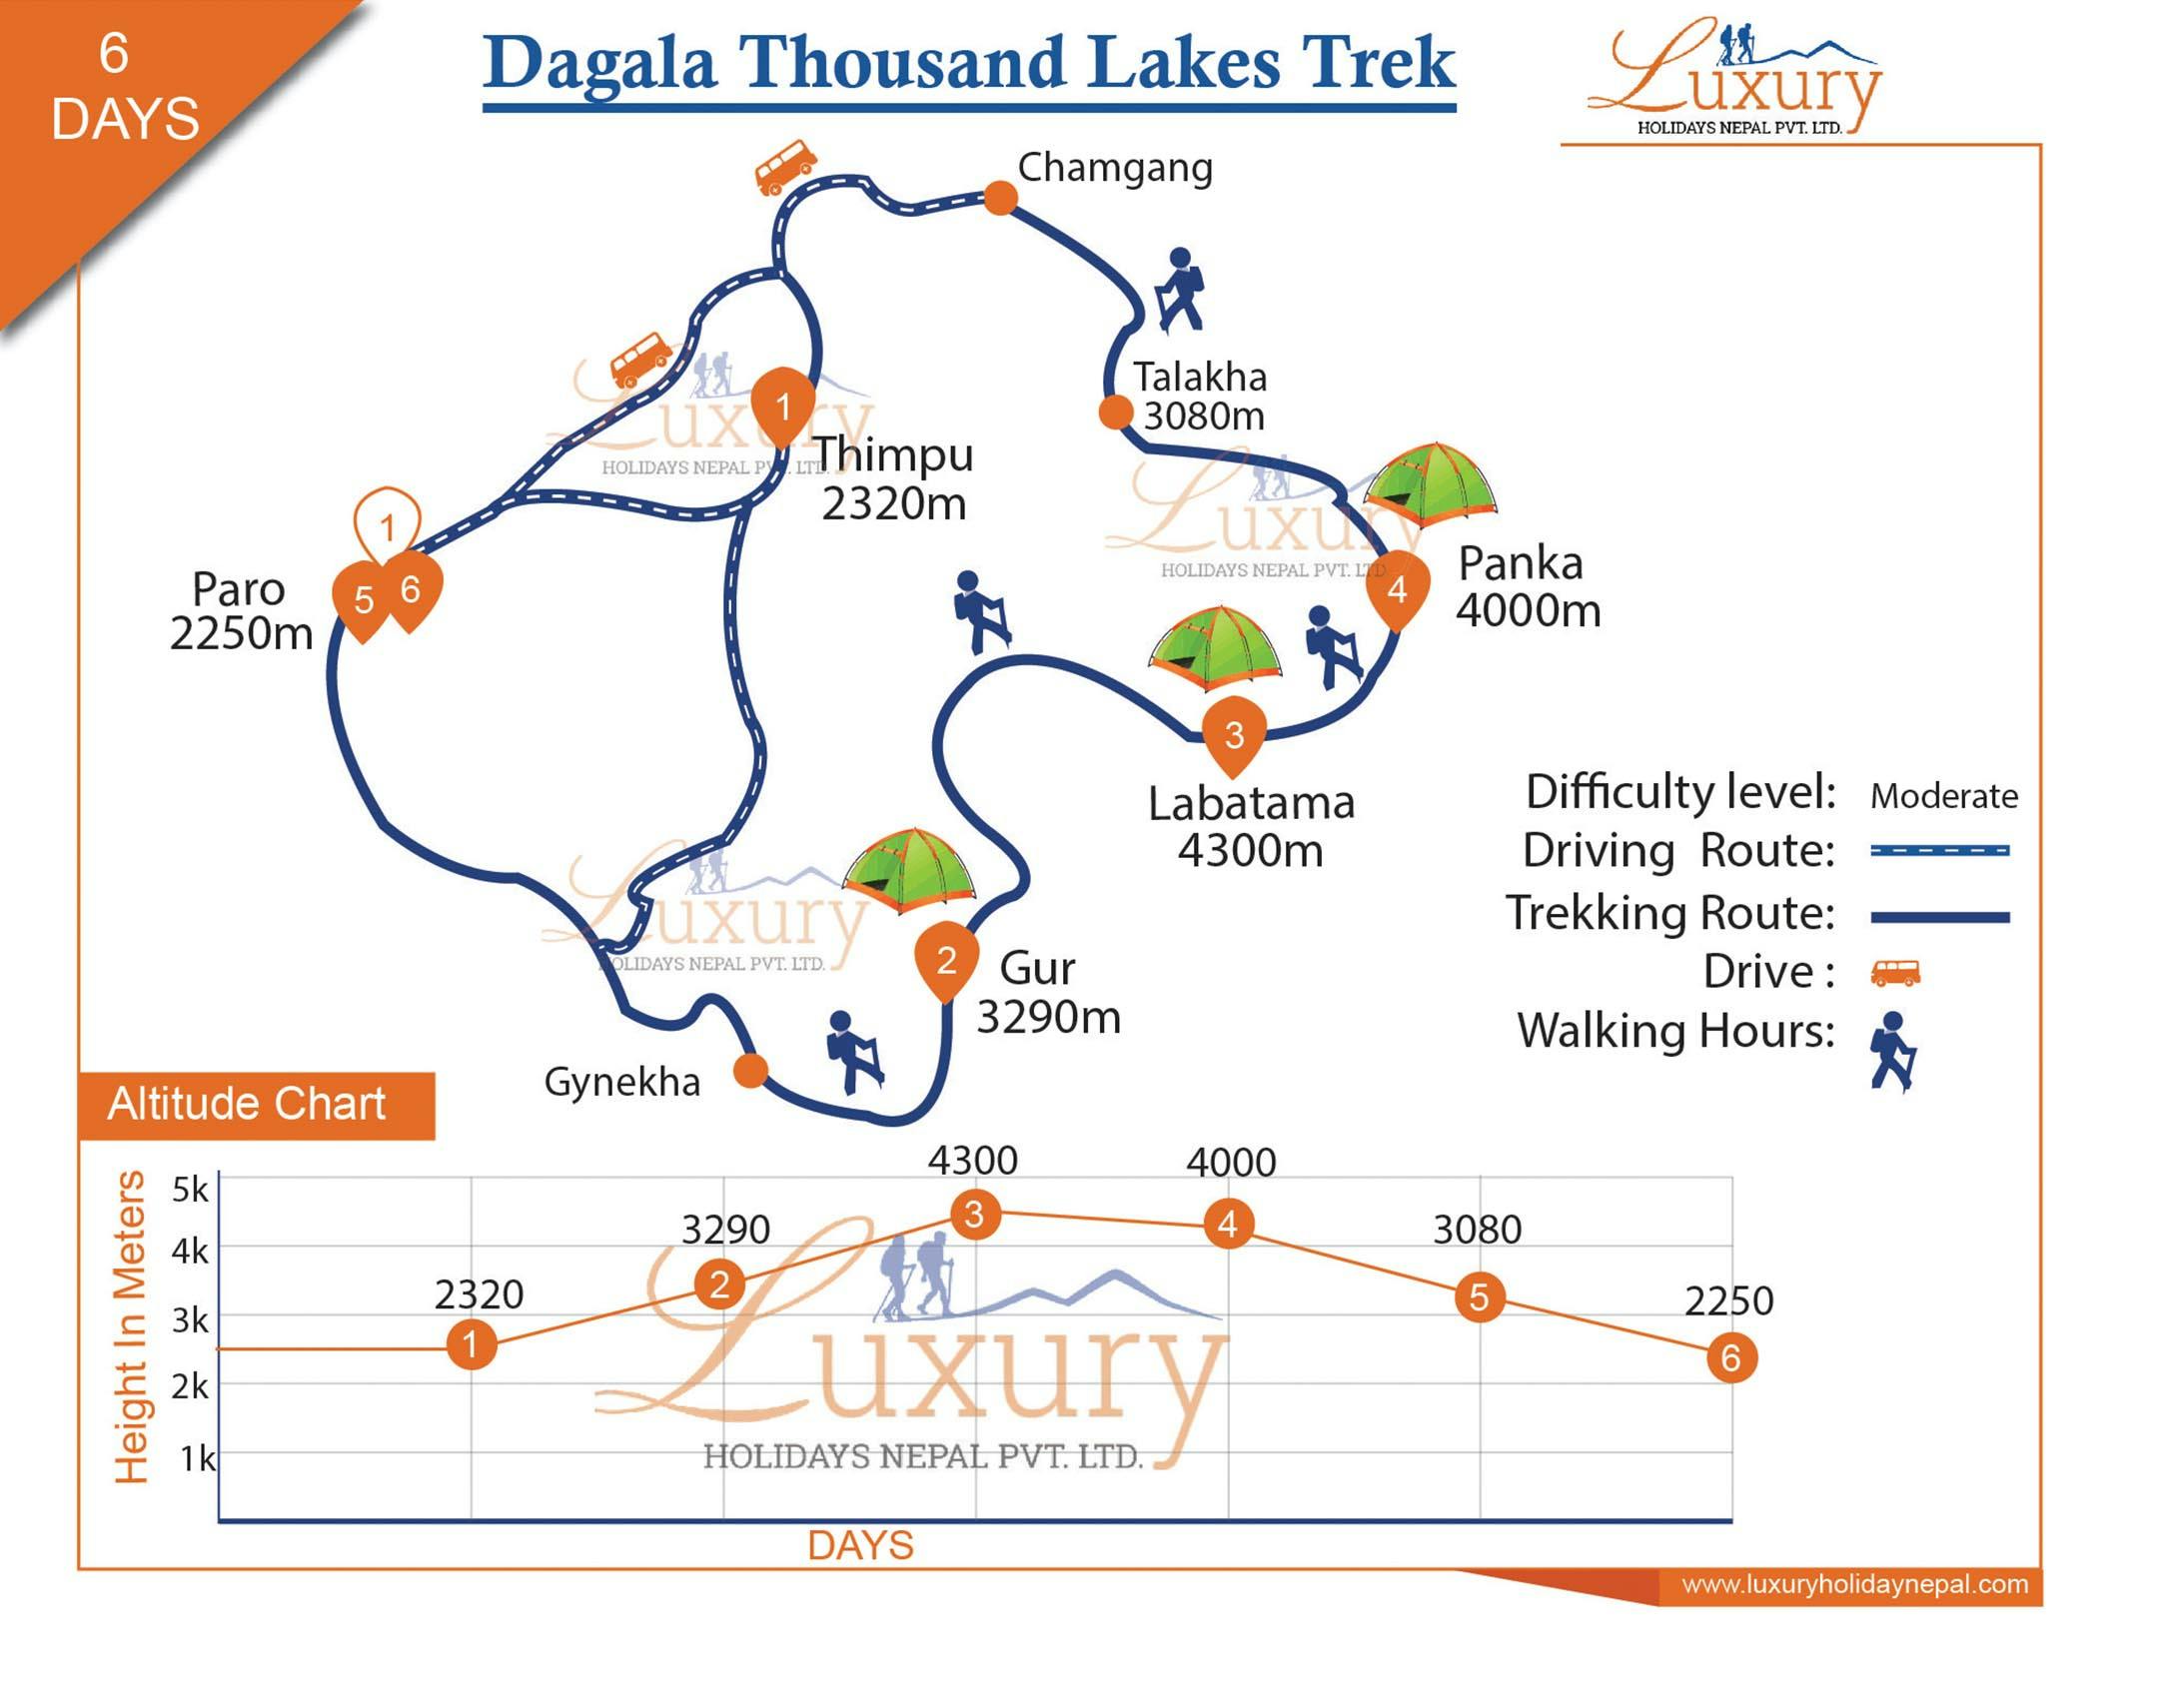 Dagala Thousand Lakes Trek - 6 DaysMap